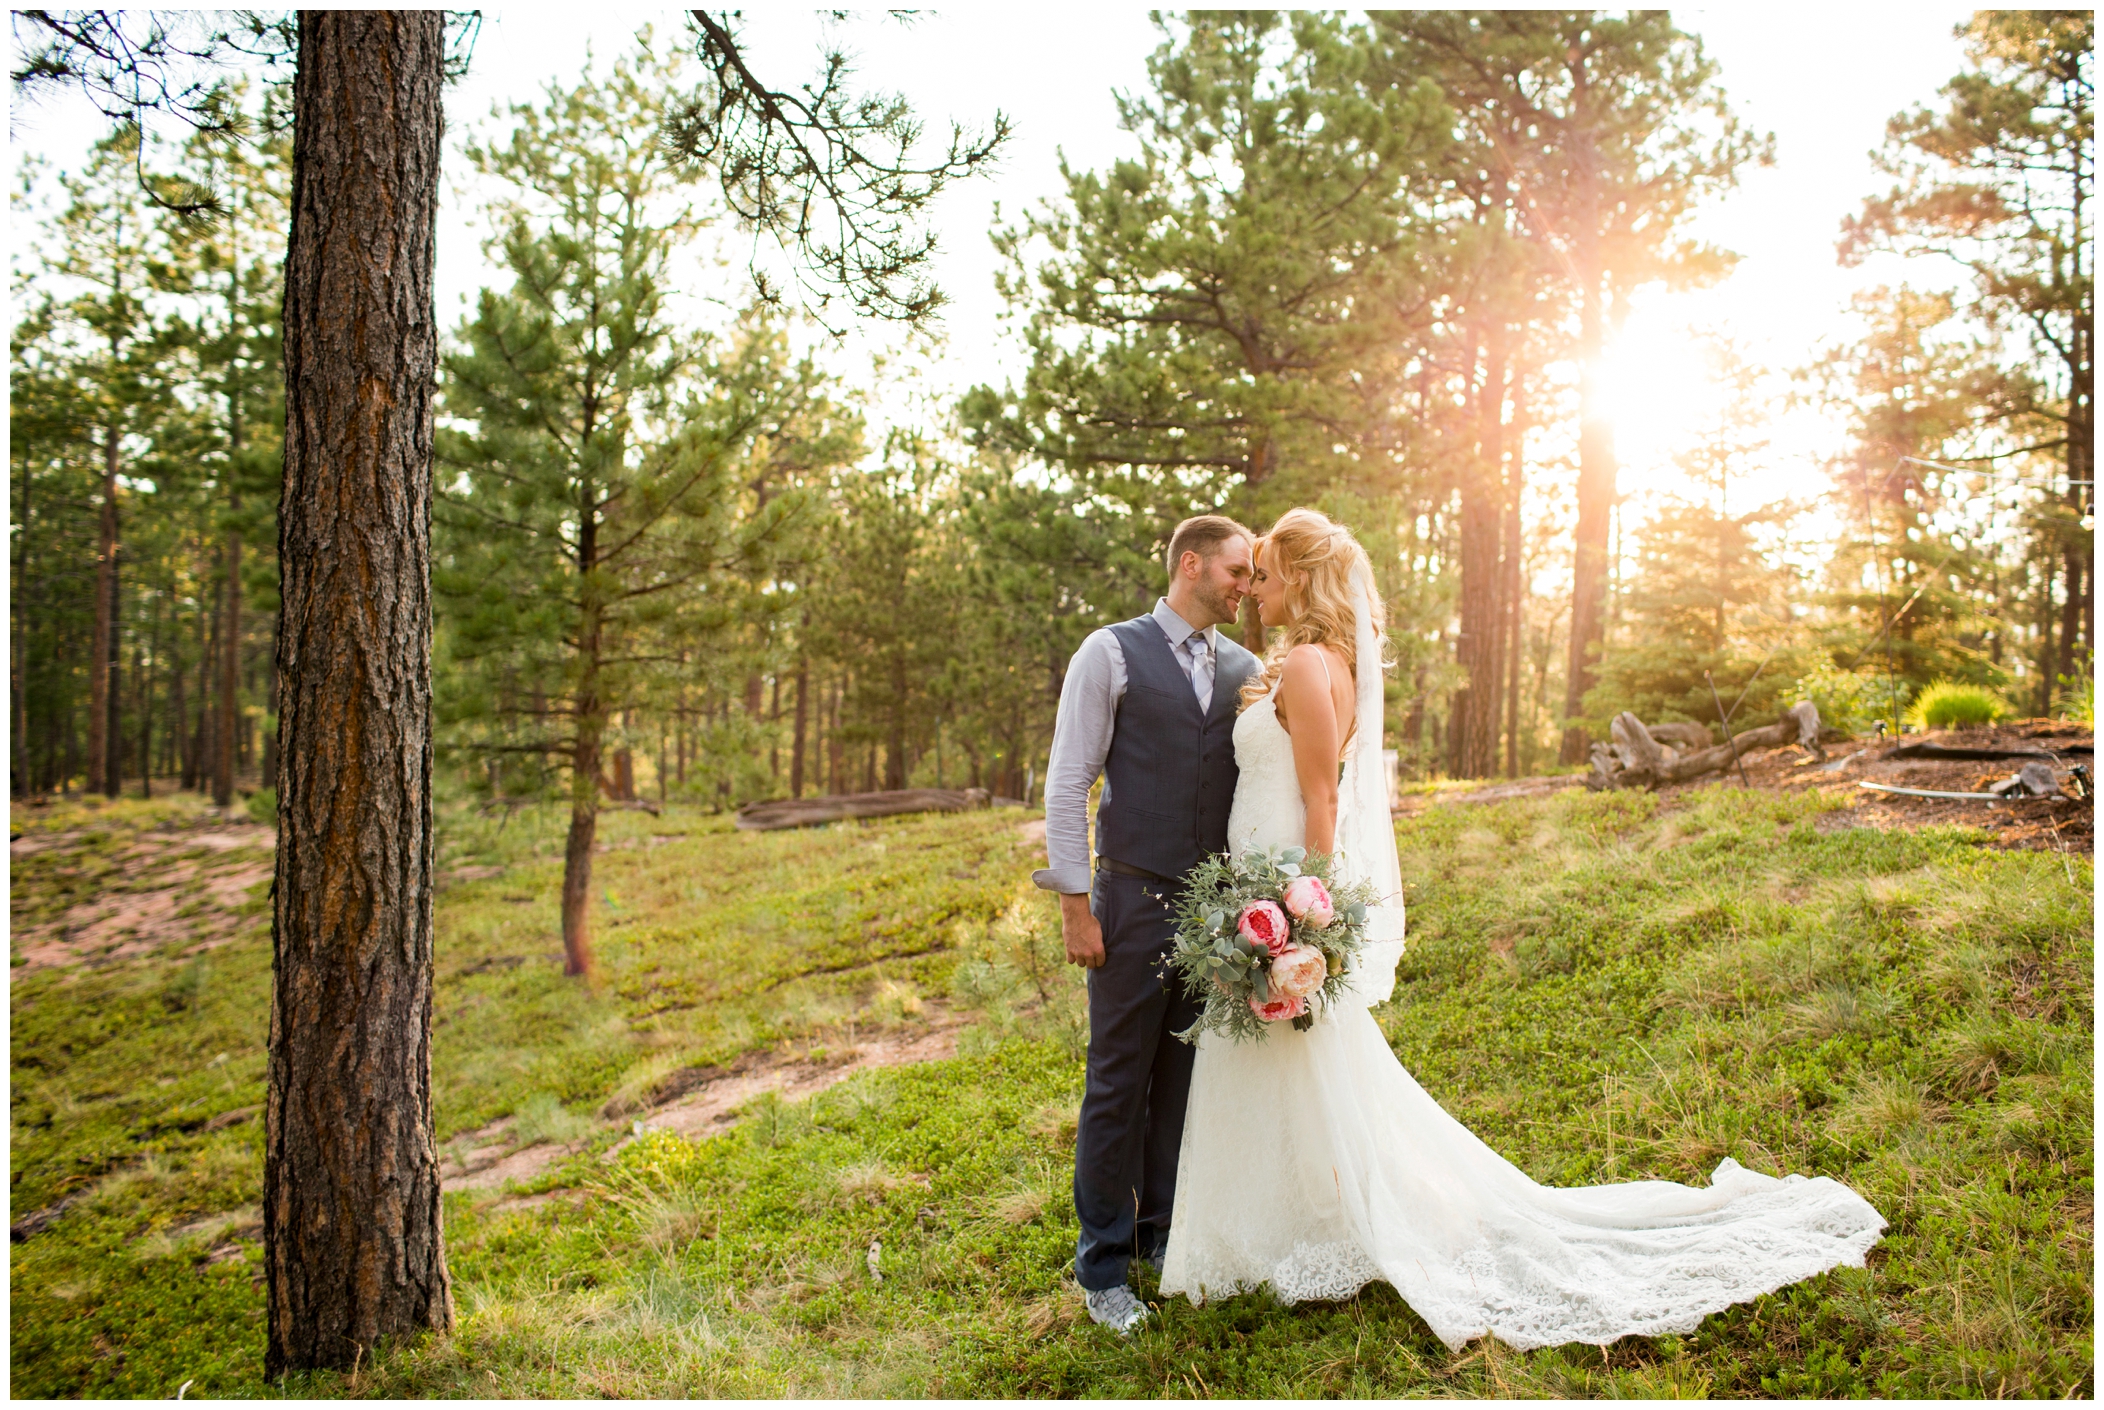 Colorado backyard wedding photos in Monument by Estes Park photographer Plum Pretty Photography